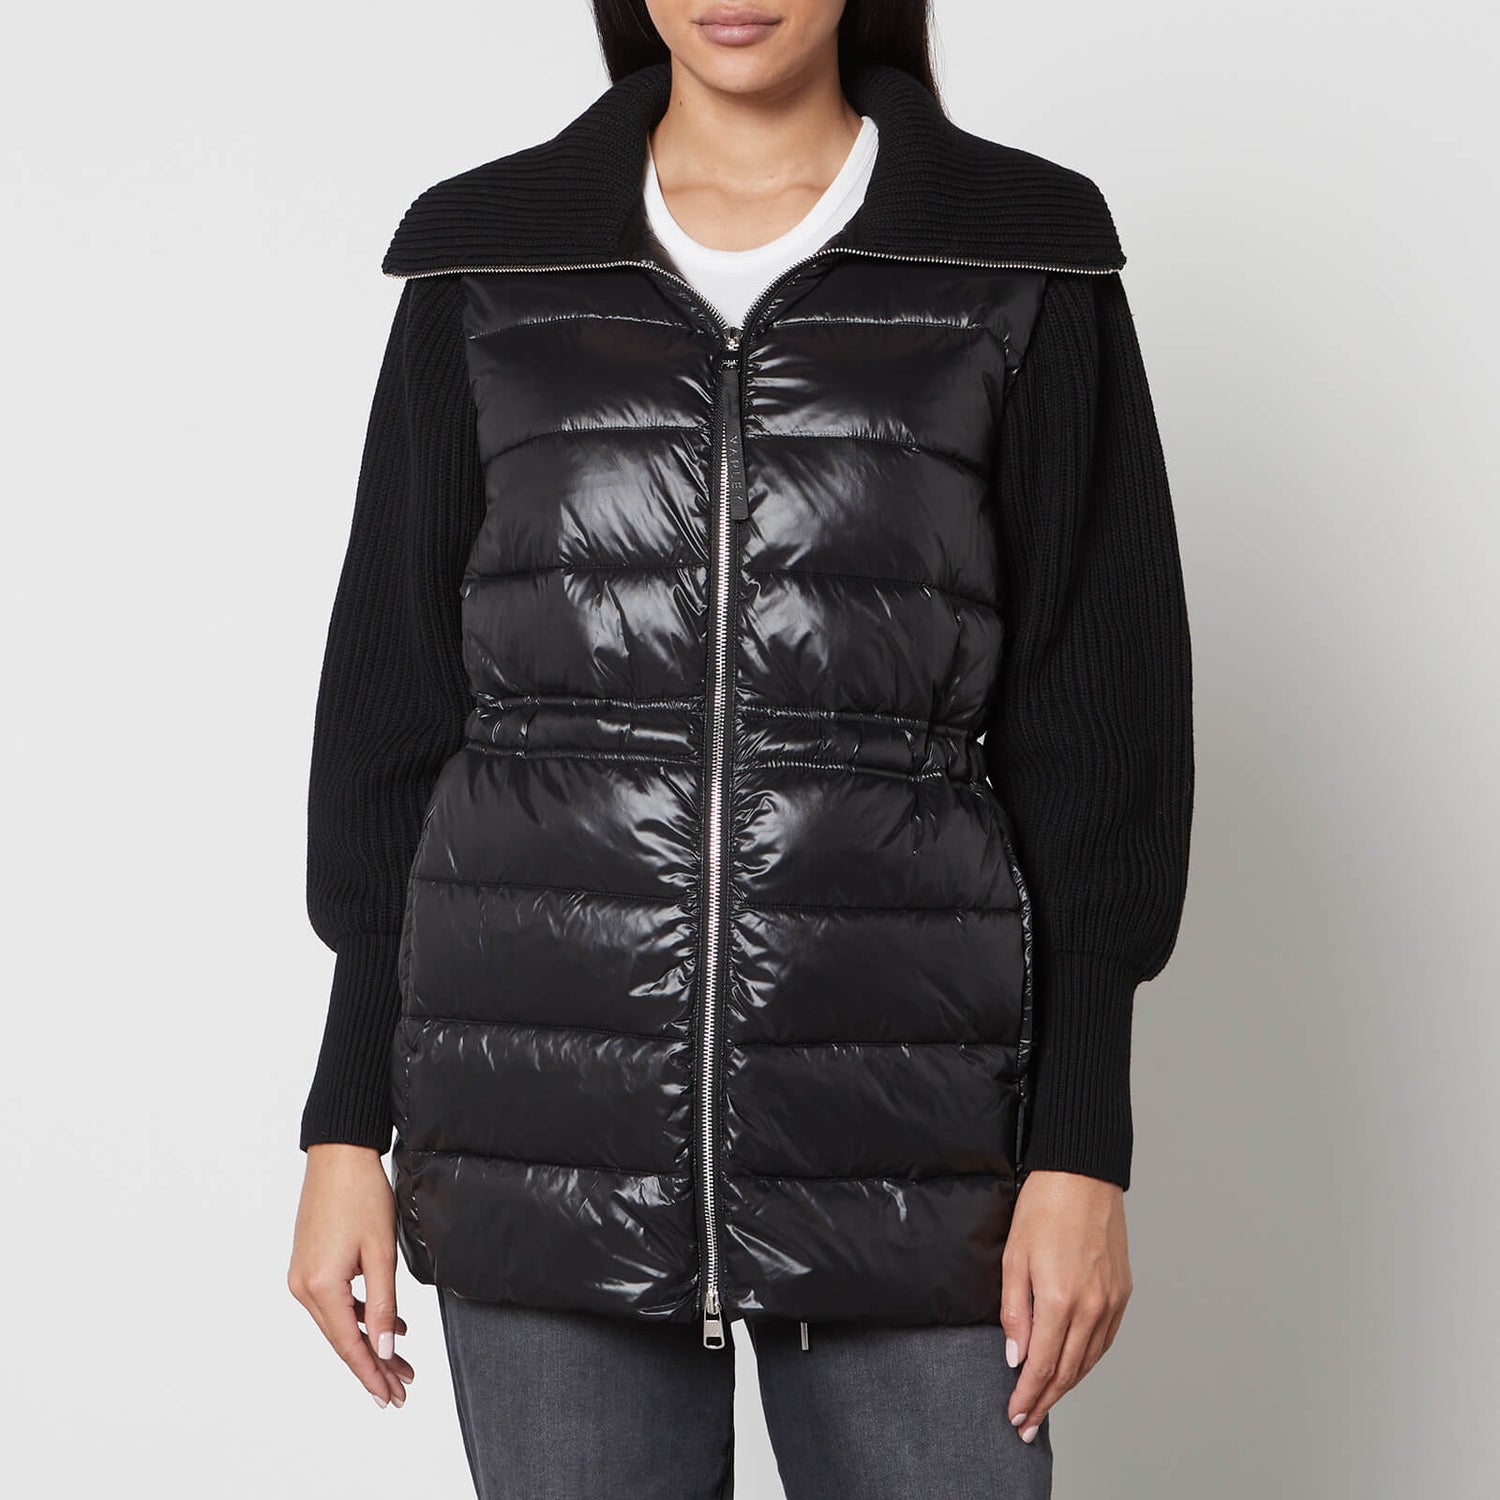 Varley Montrose Nylon and Knit Zip Through Jacket - XS